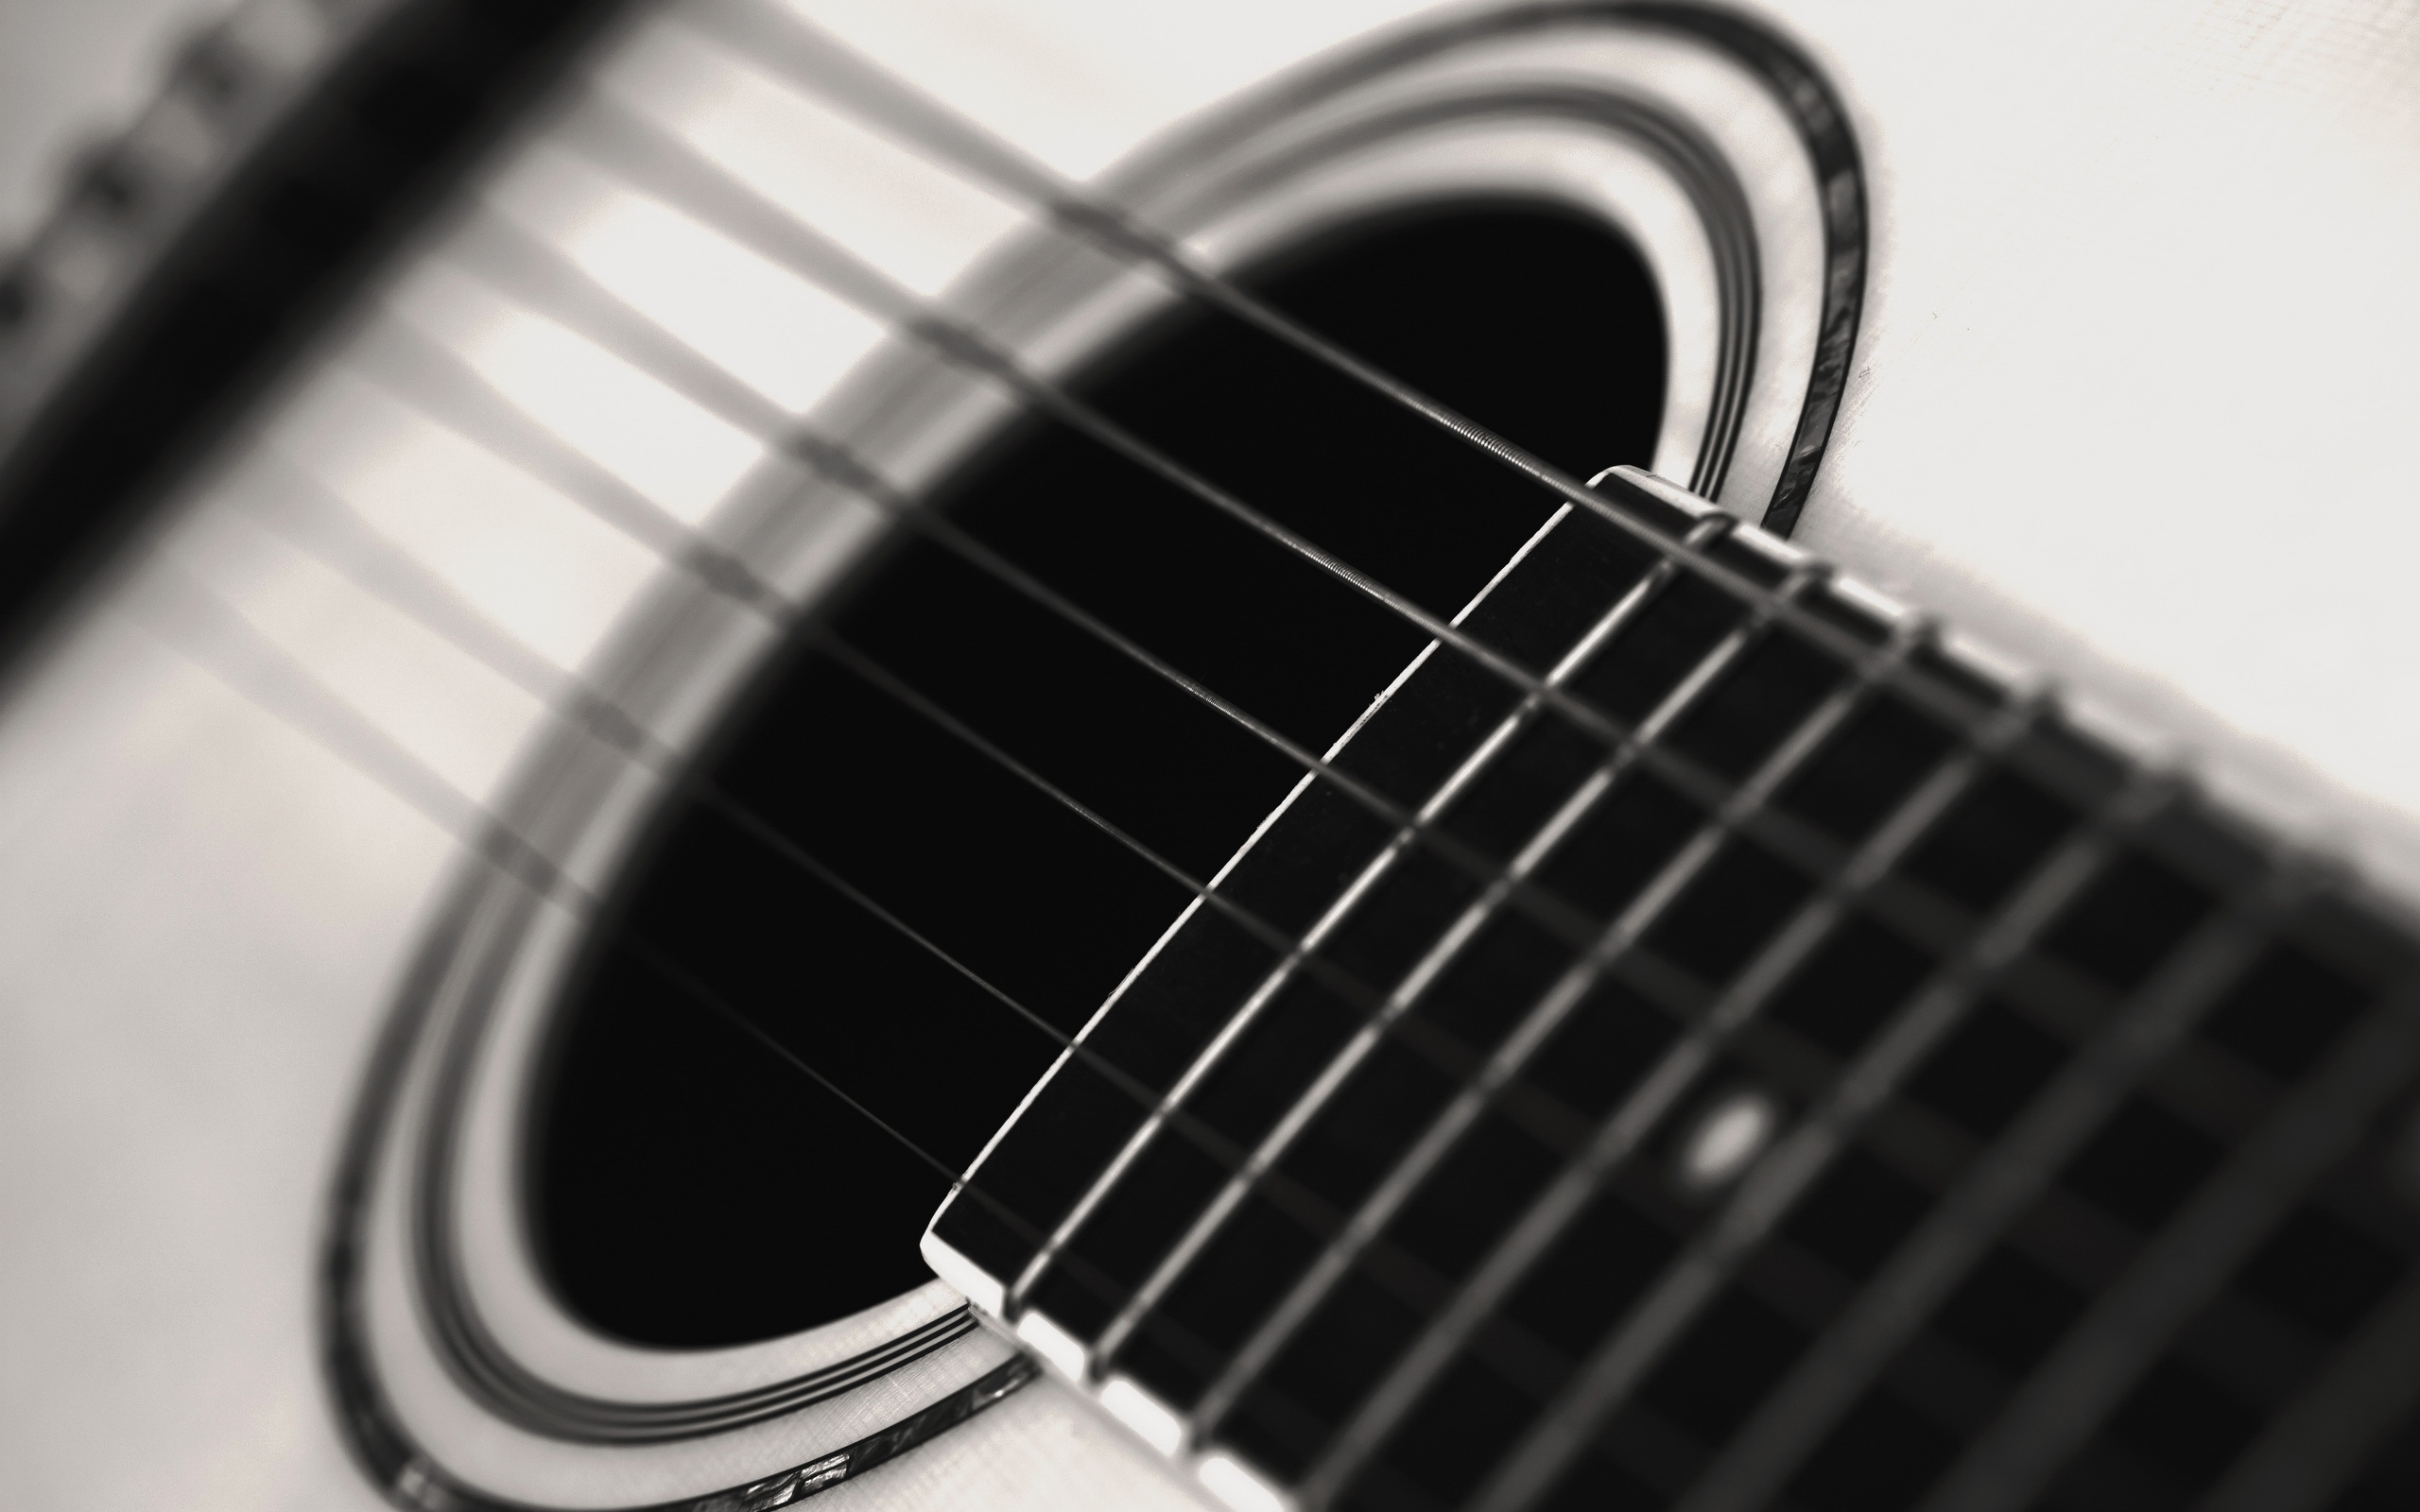 gitarre wallpaper,string instrument,guitar,acoustic guitar,string instrument,plucked string instruments